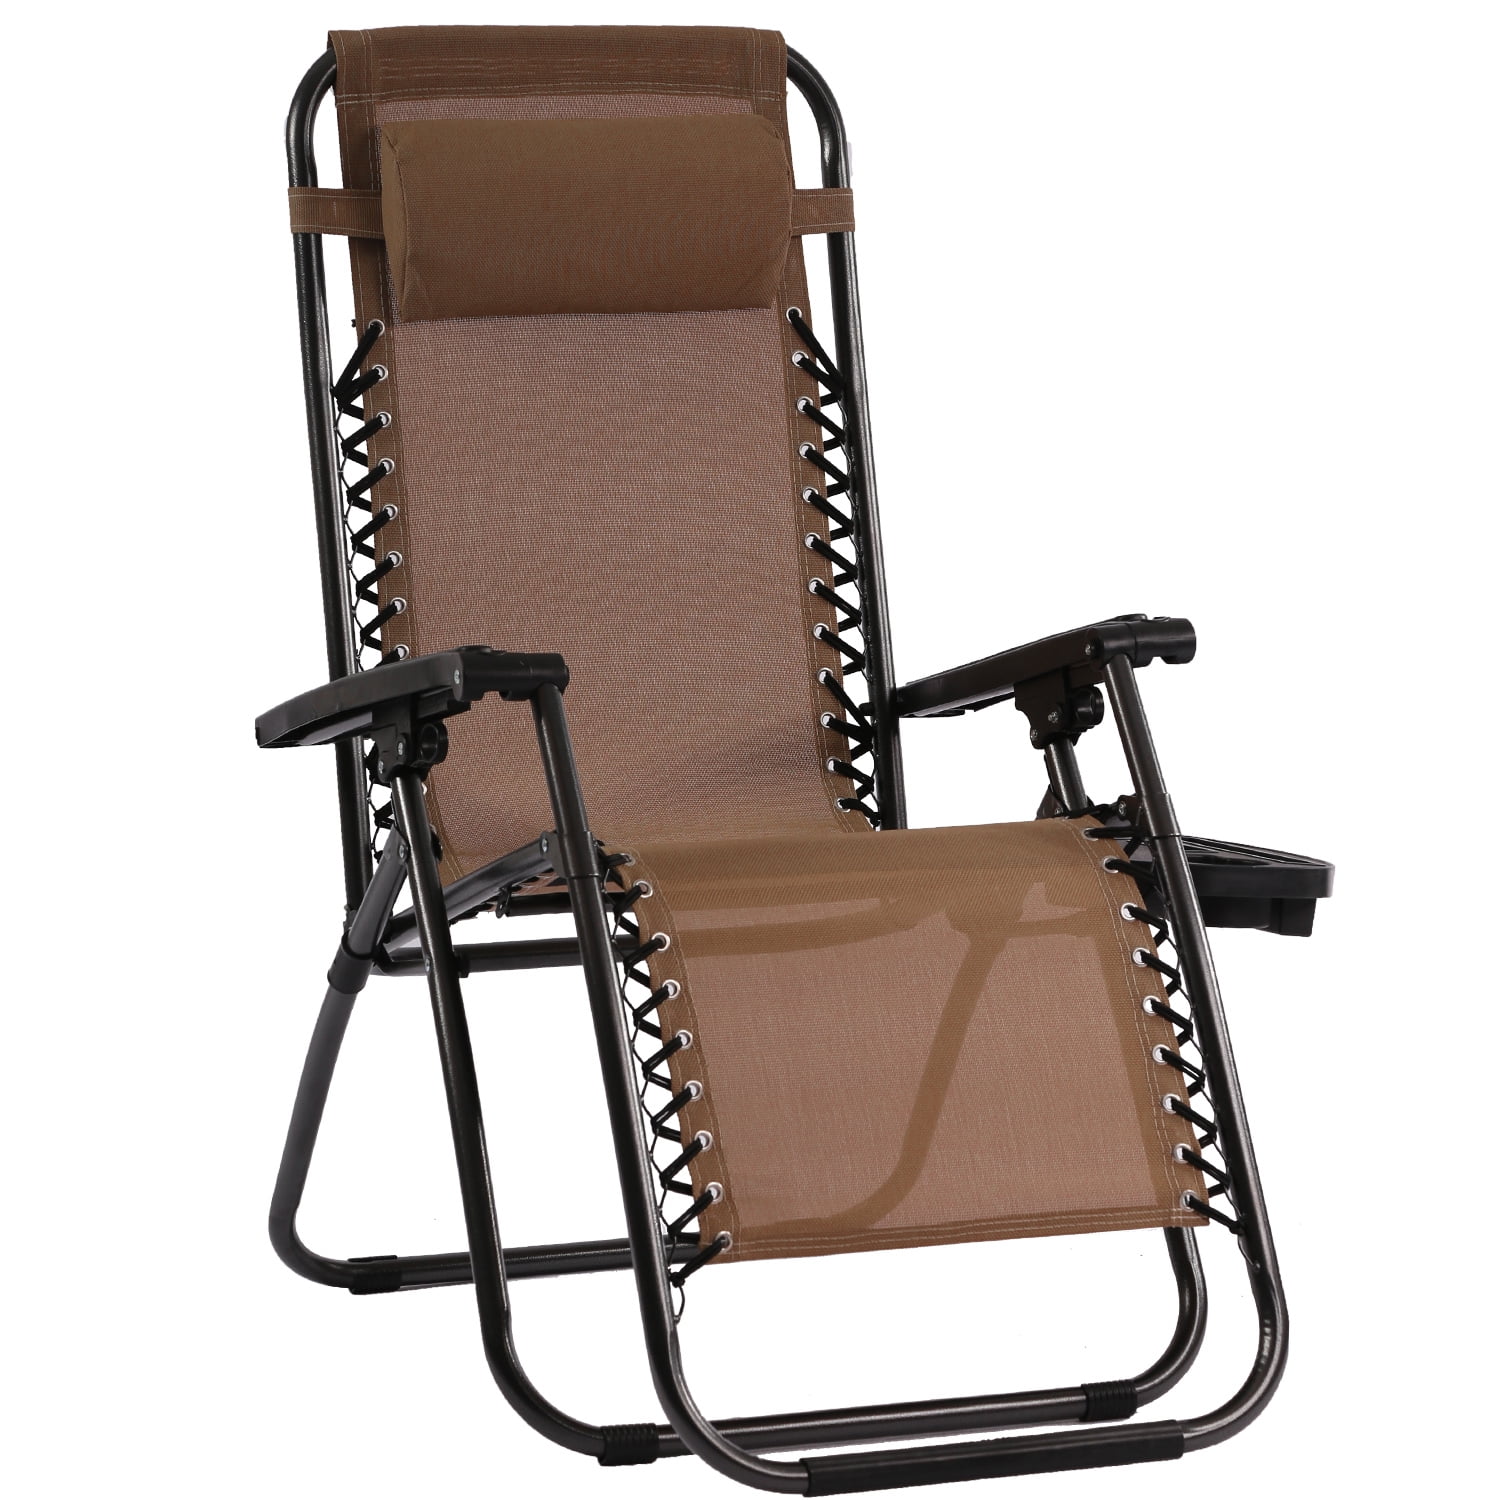 Details about   Folding Zero Gravity Recliner Chair Sun Lounge Beach Camping Patio Yard Garde US 